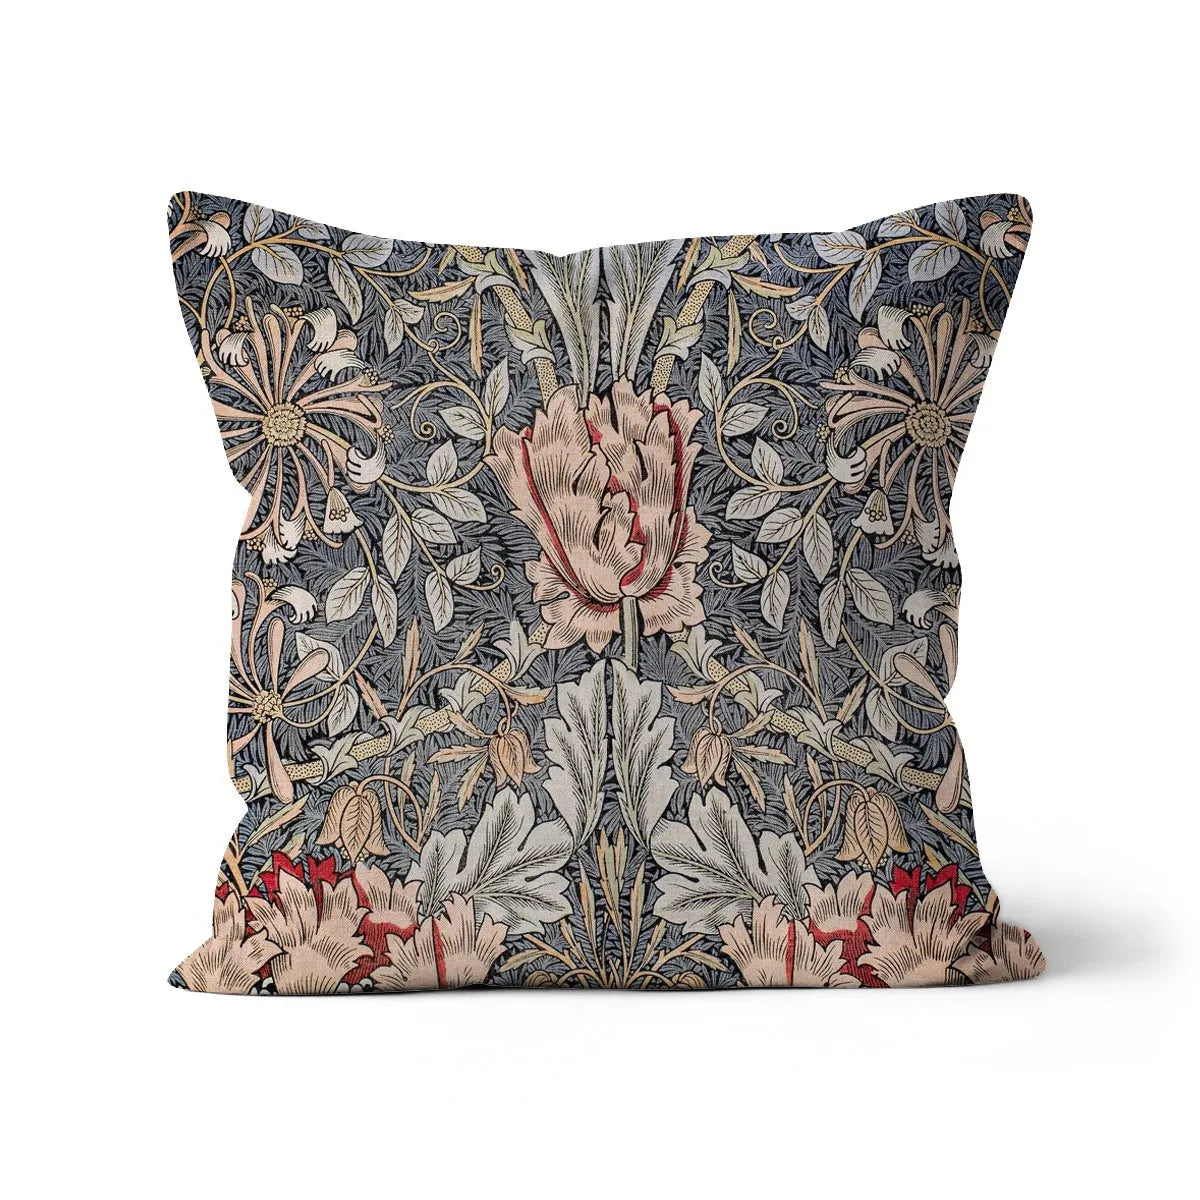 Honeysuckle - William Morris Cushion - Decorative Throw Pillow - Canvas / 16x16